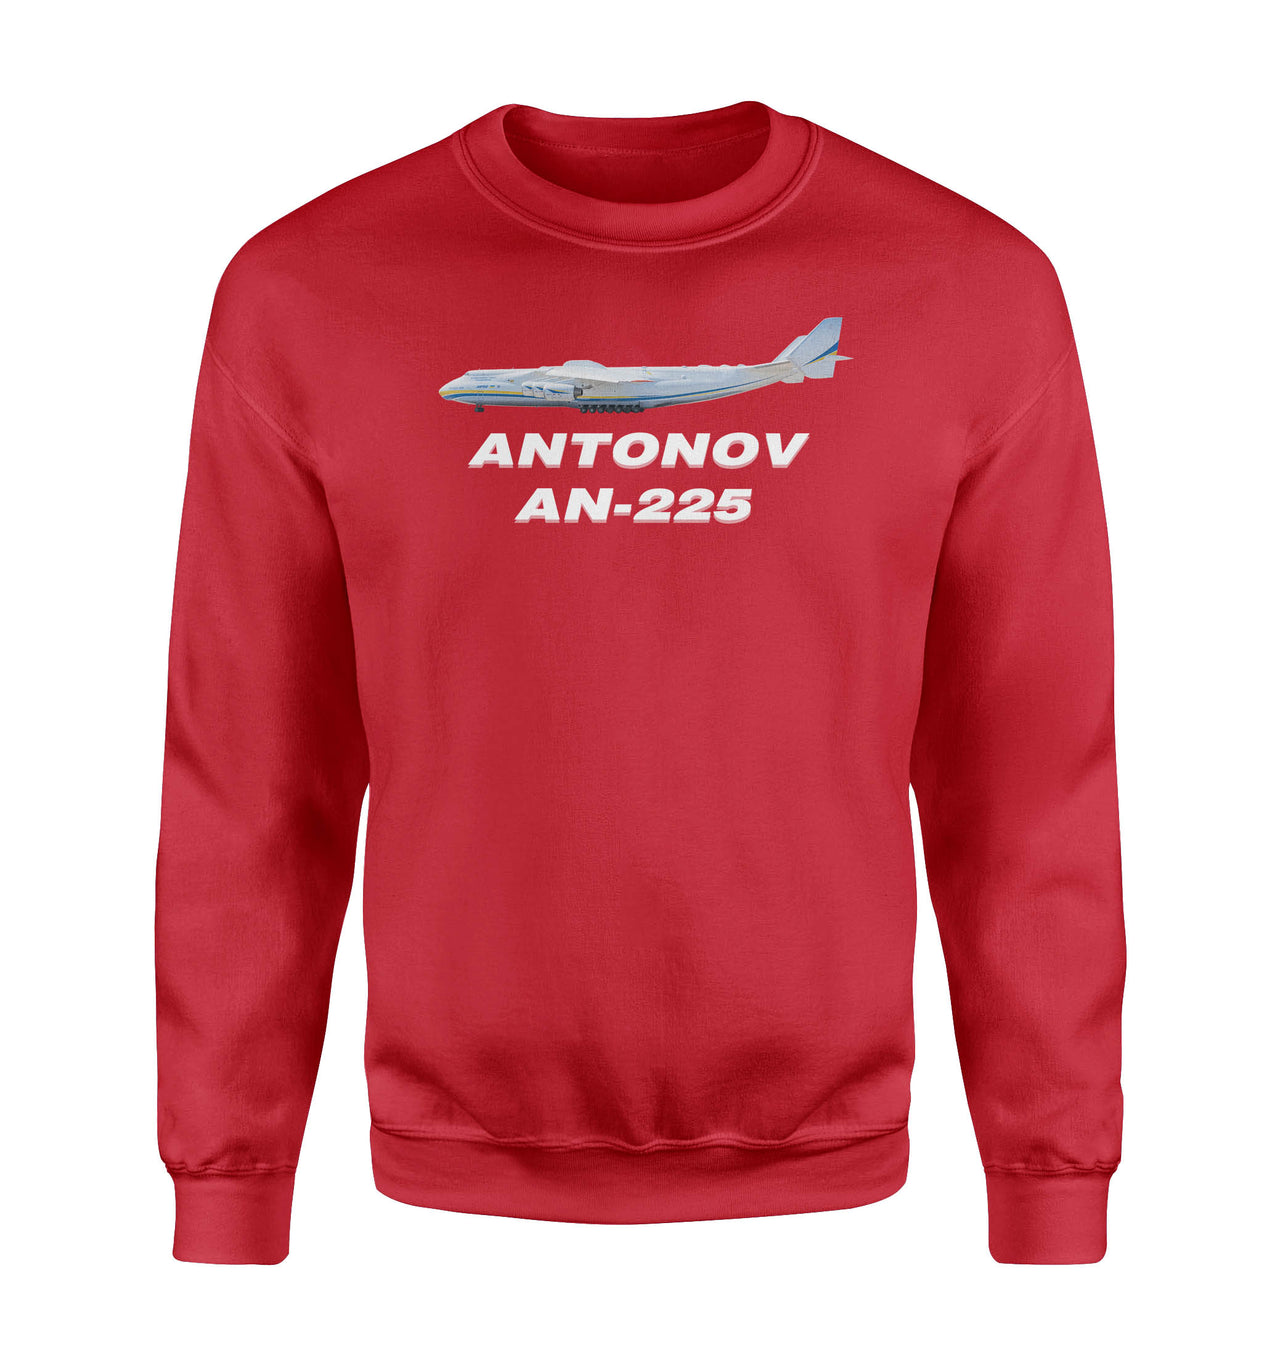 The Antonov AN-225 Designed Sweatshirts